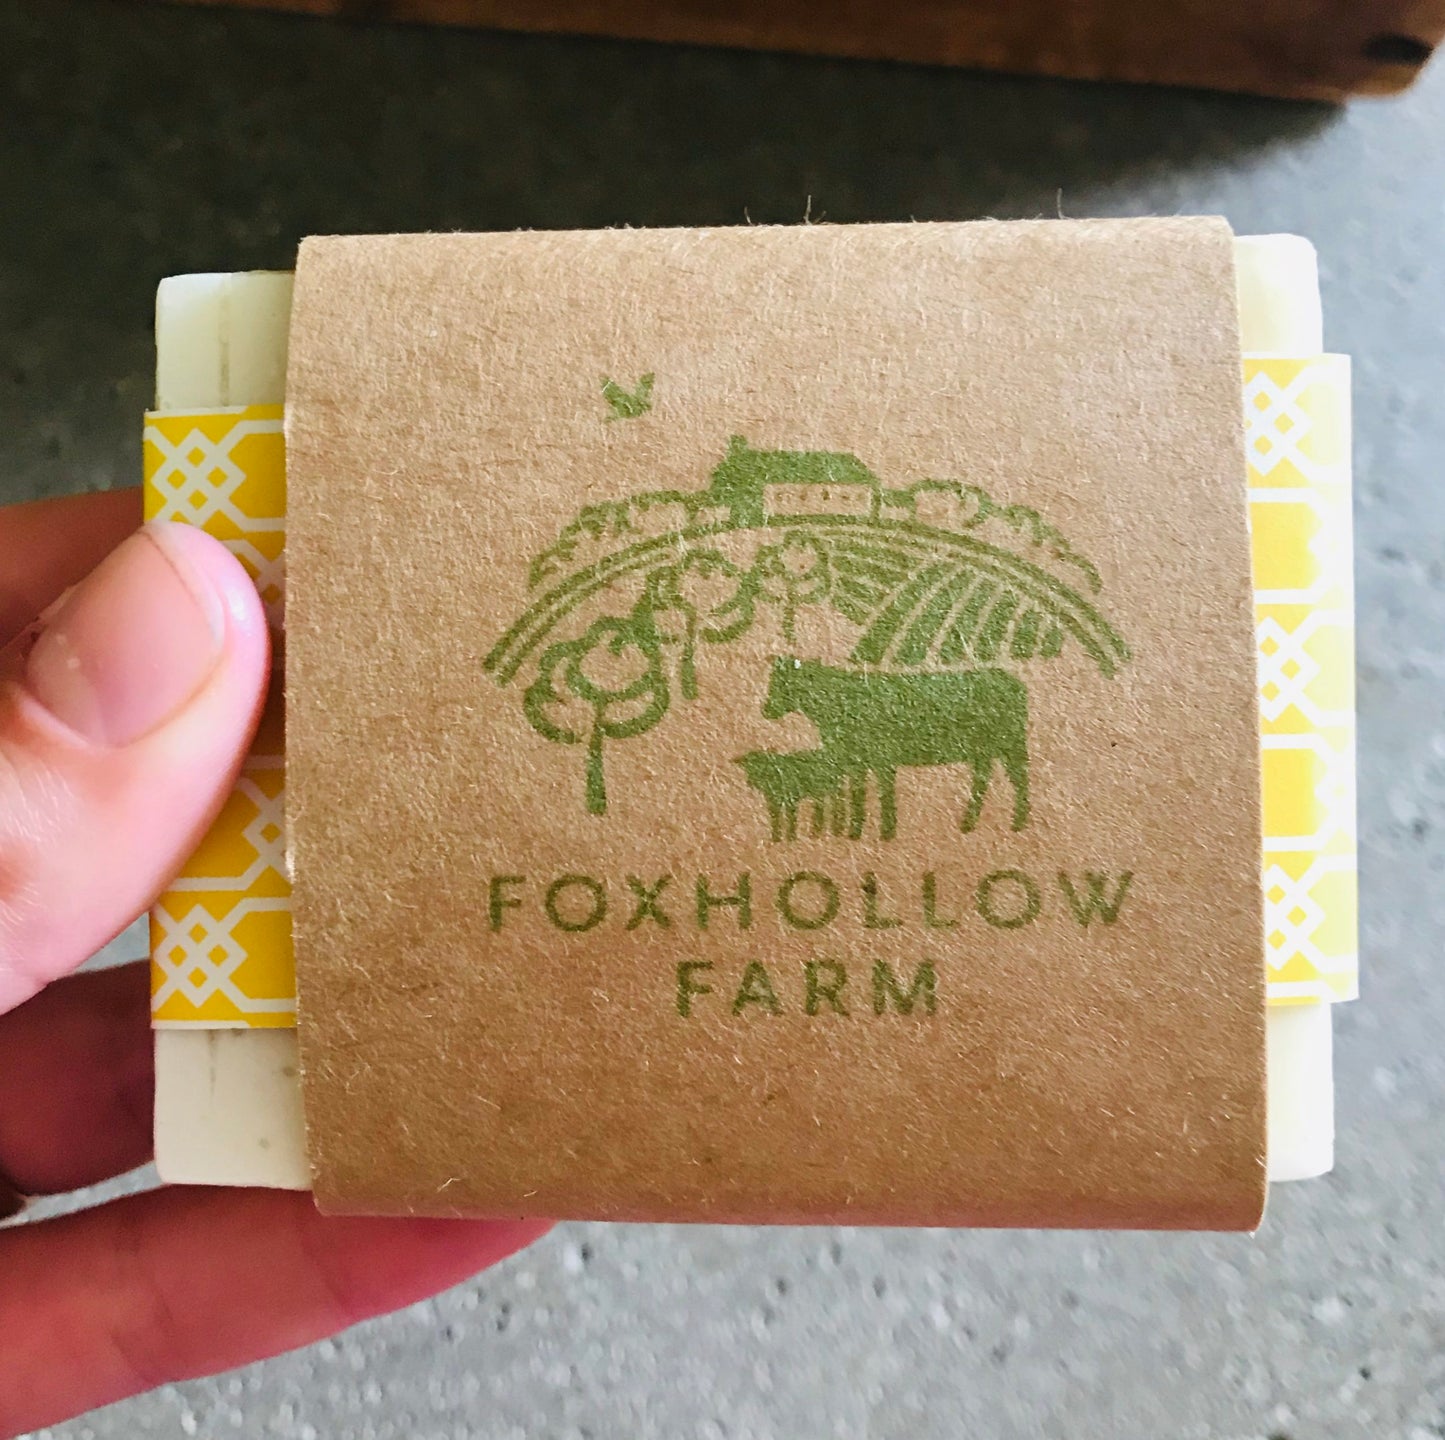 Tallow Foxhollow Farm